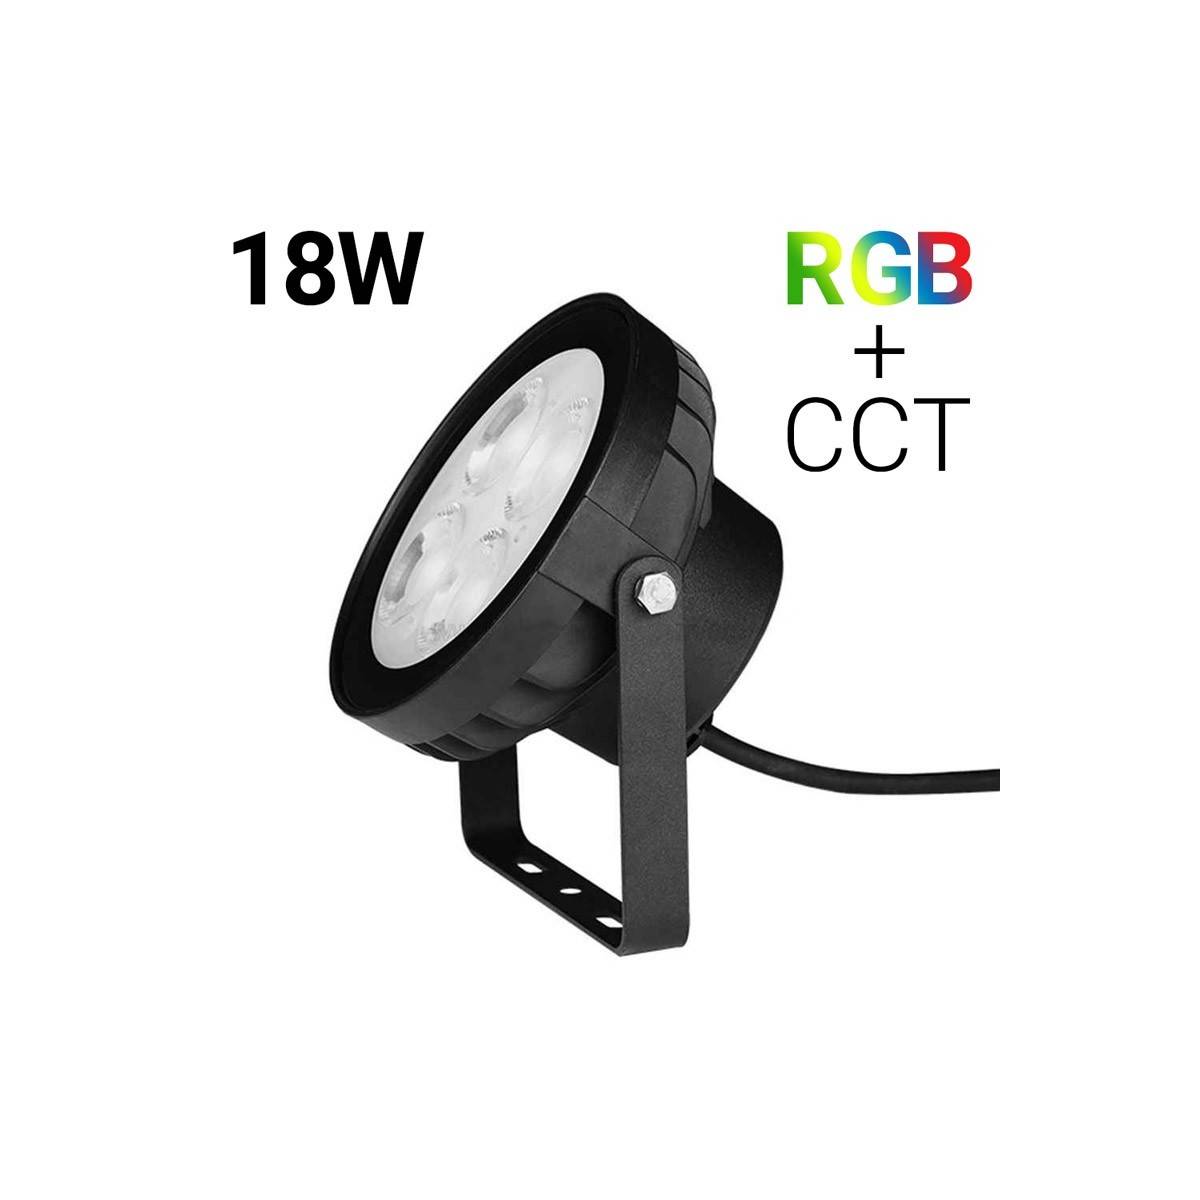 LED Floodlight 18W RGB+CCT controlled by RF/WiFi - IP66